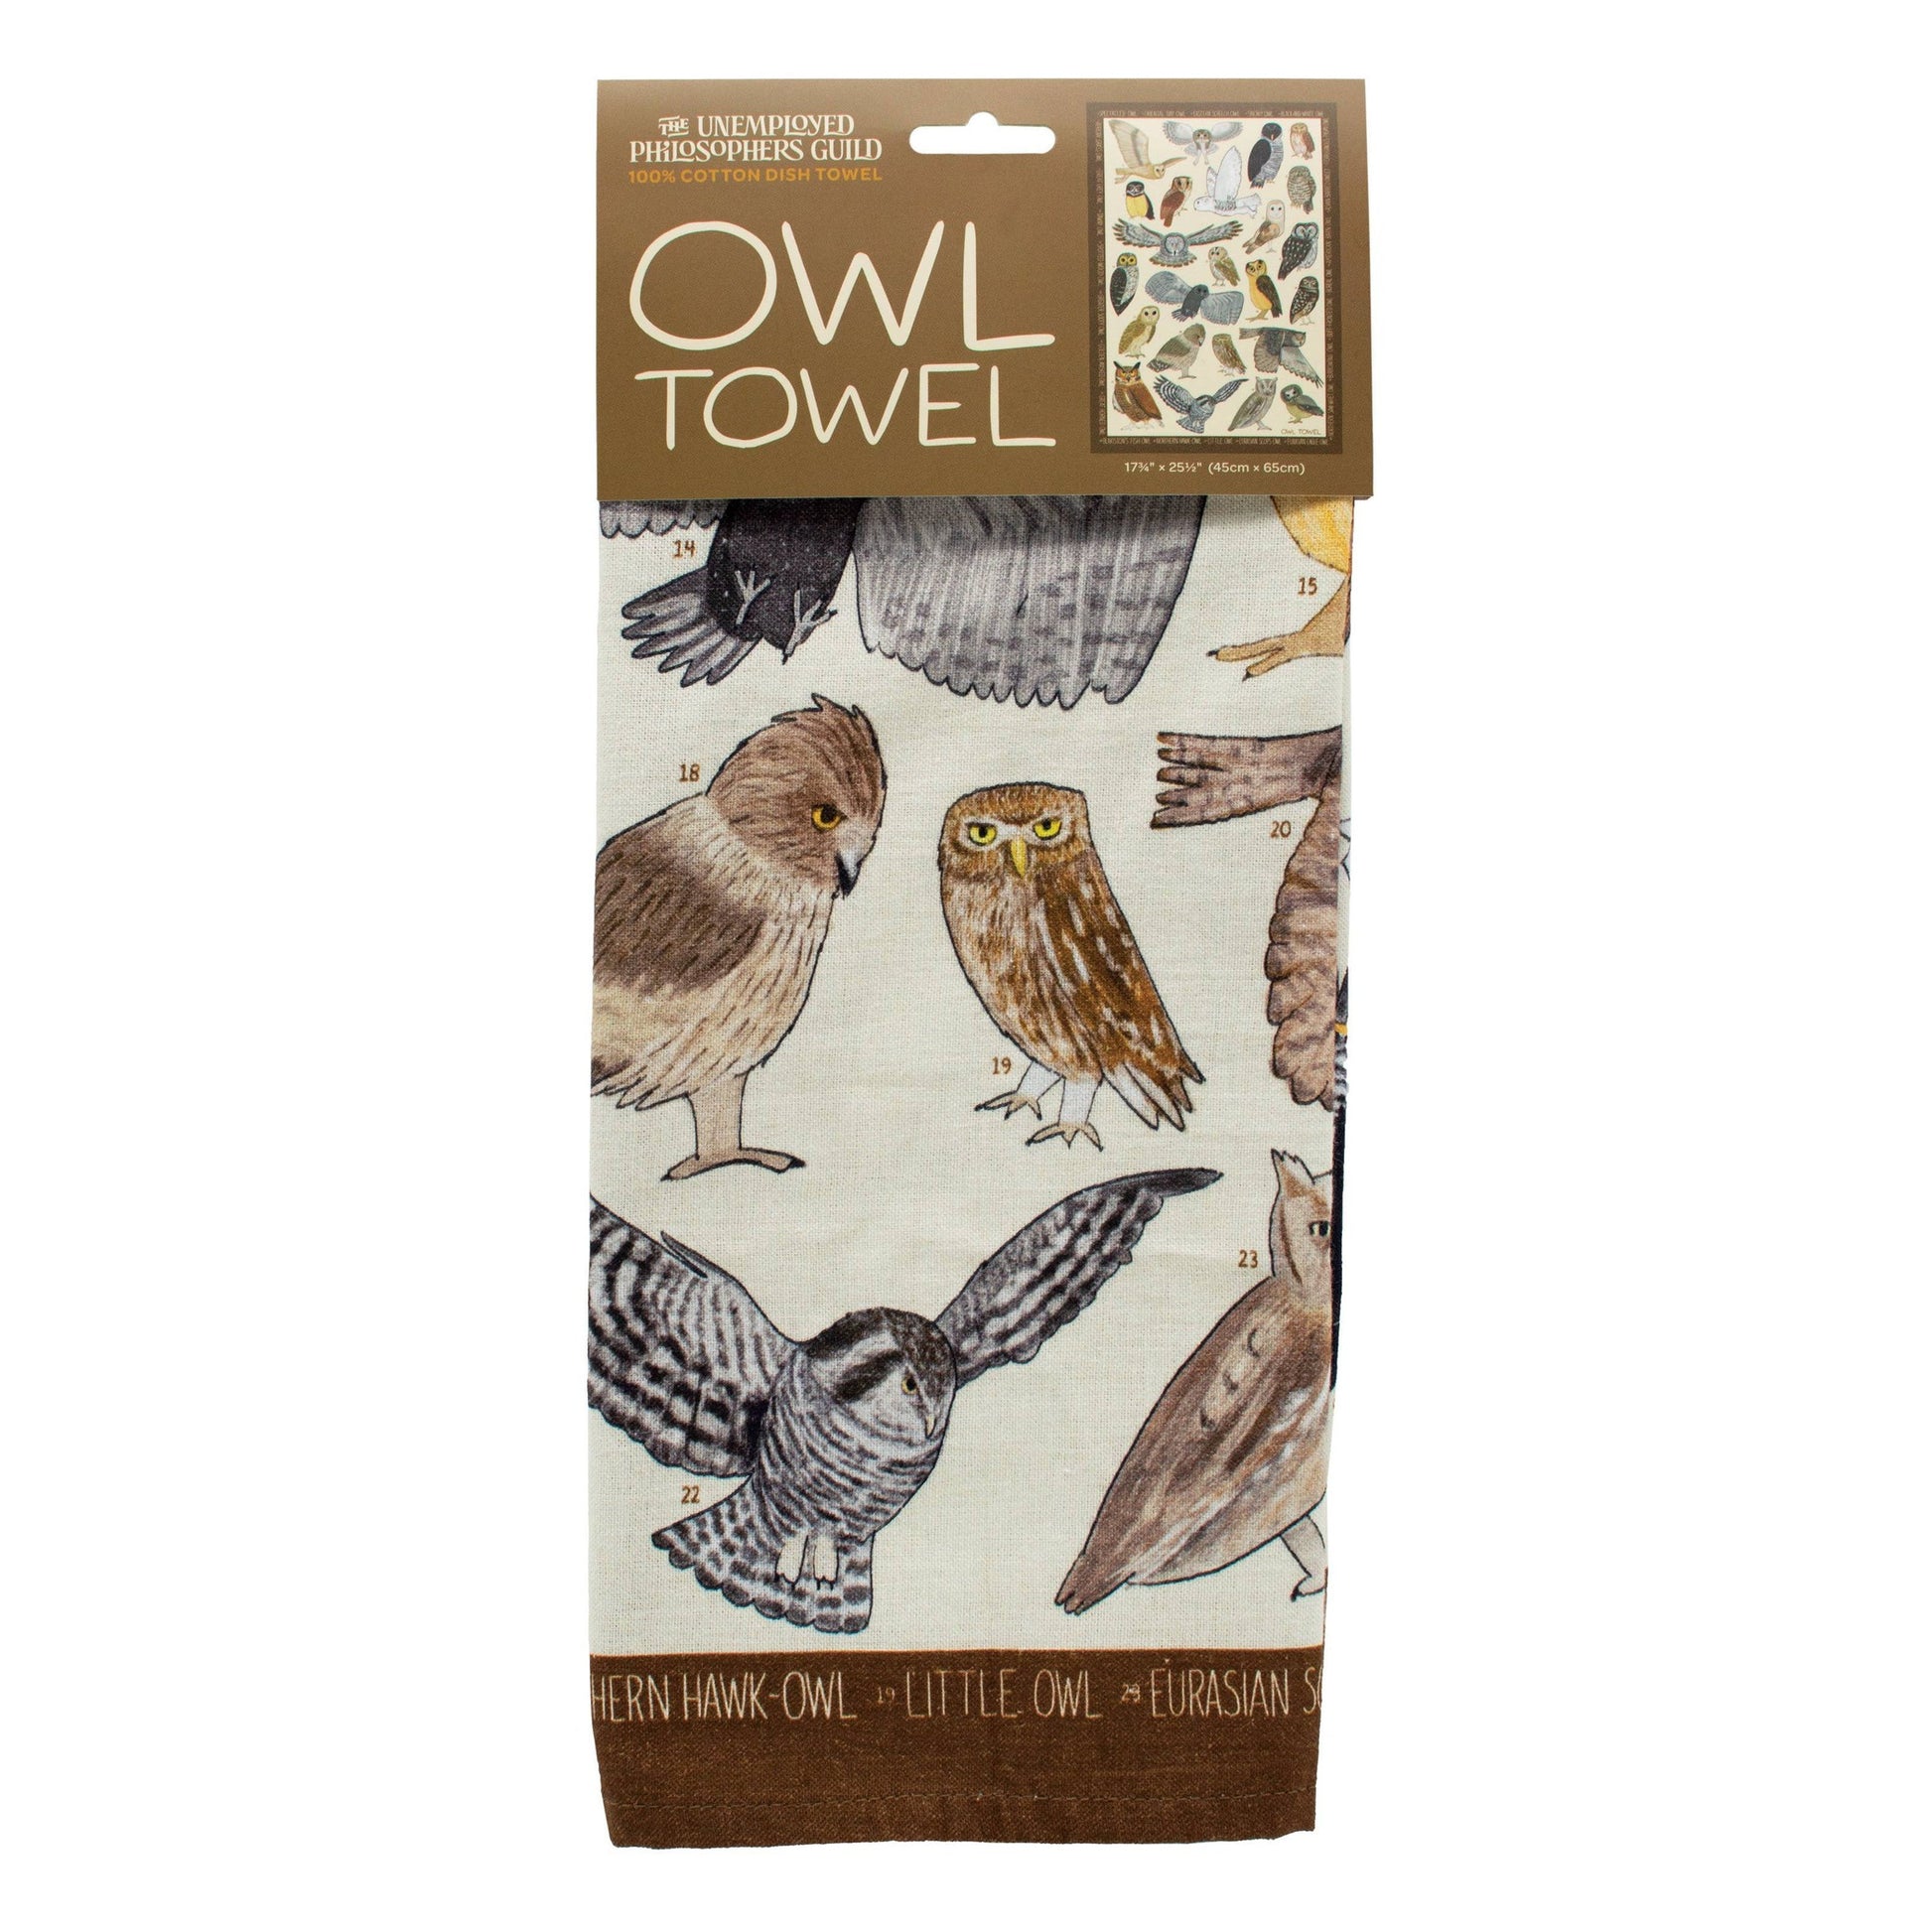 Owl Towel | Night Bird Kitchen Tea Dish Towel | 17.25" x 25.5"